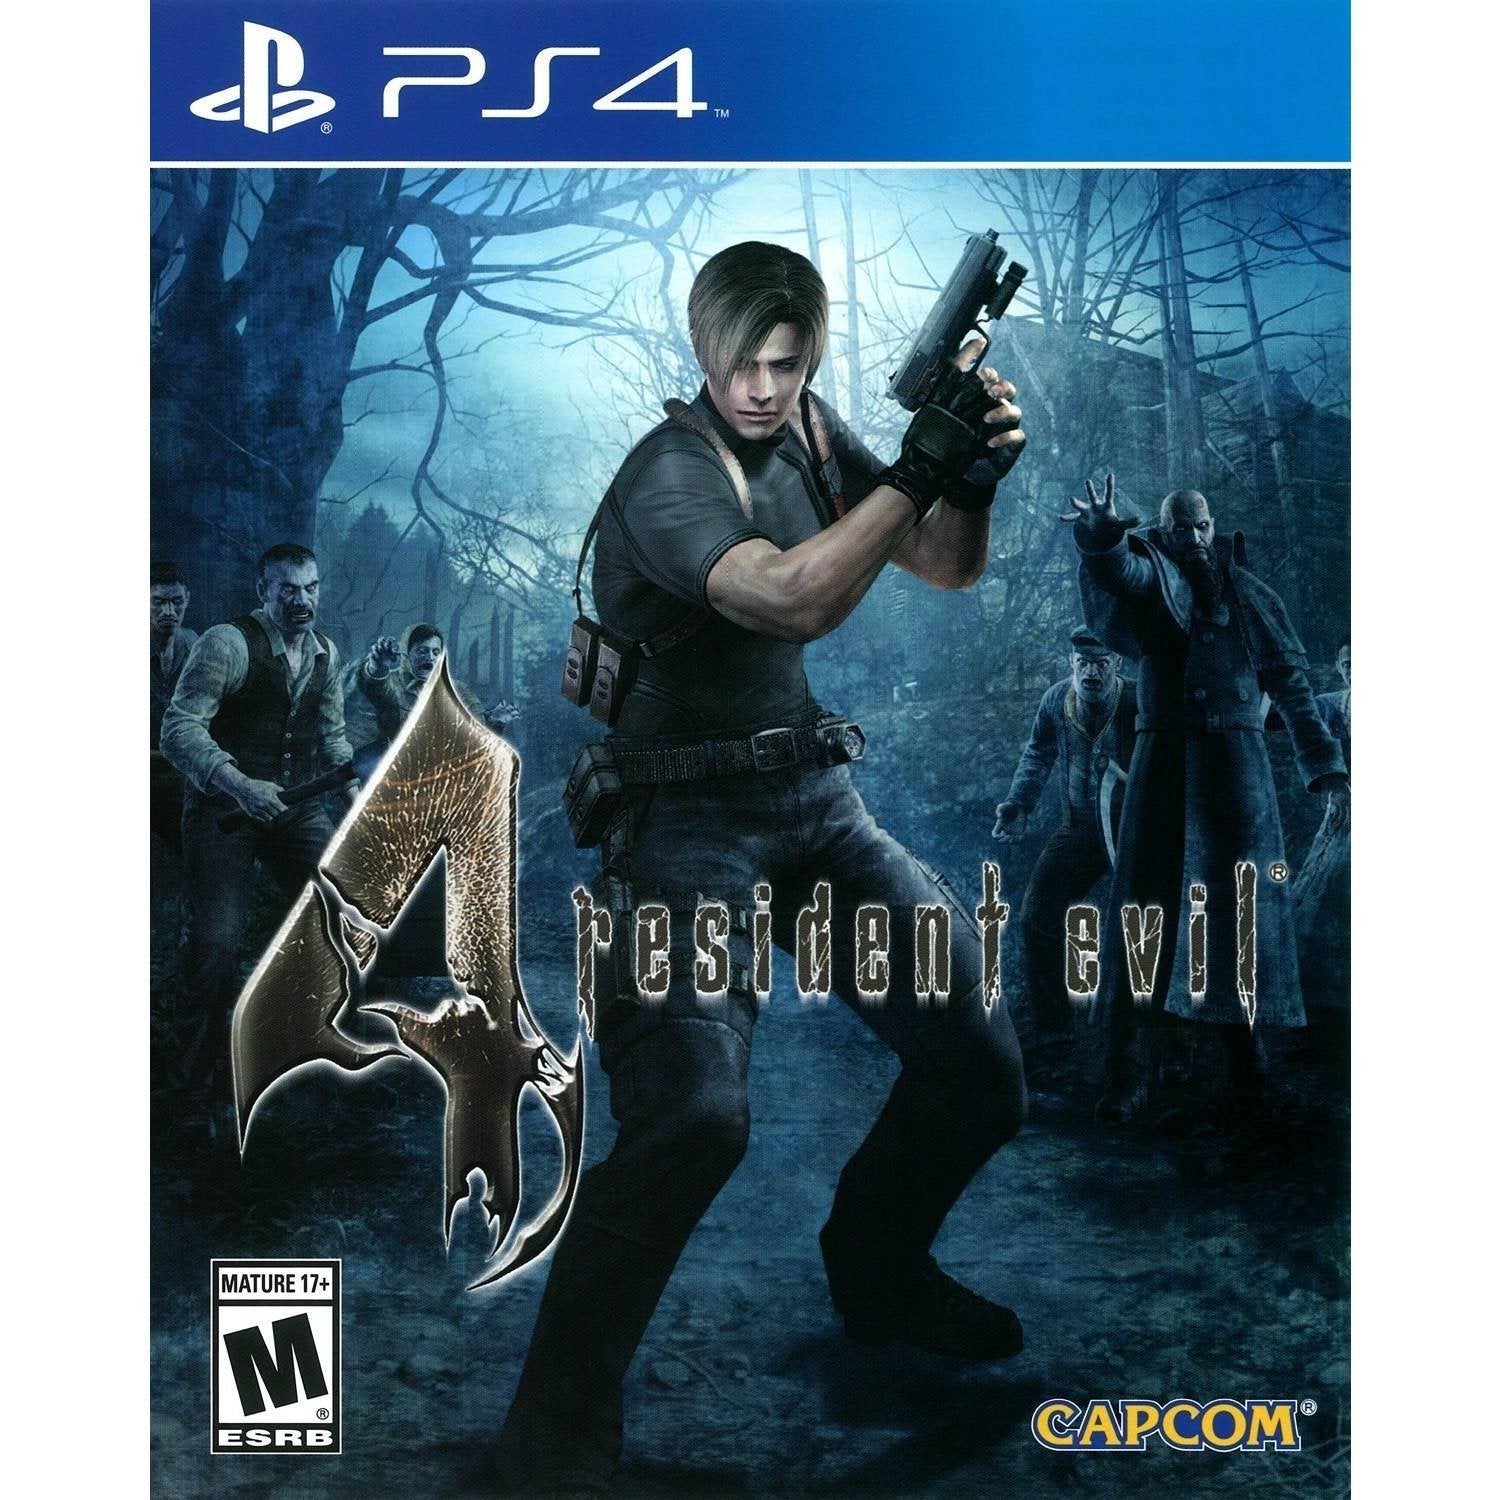 PS4 RESIDENT EVIL 4 - NUEVO